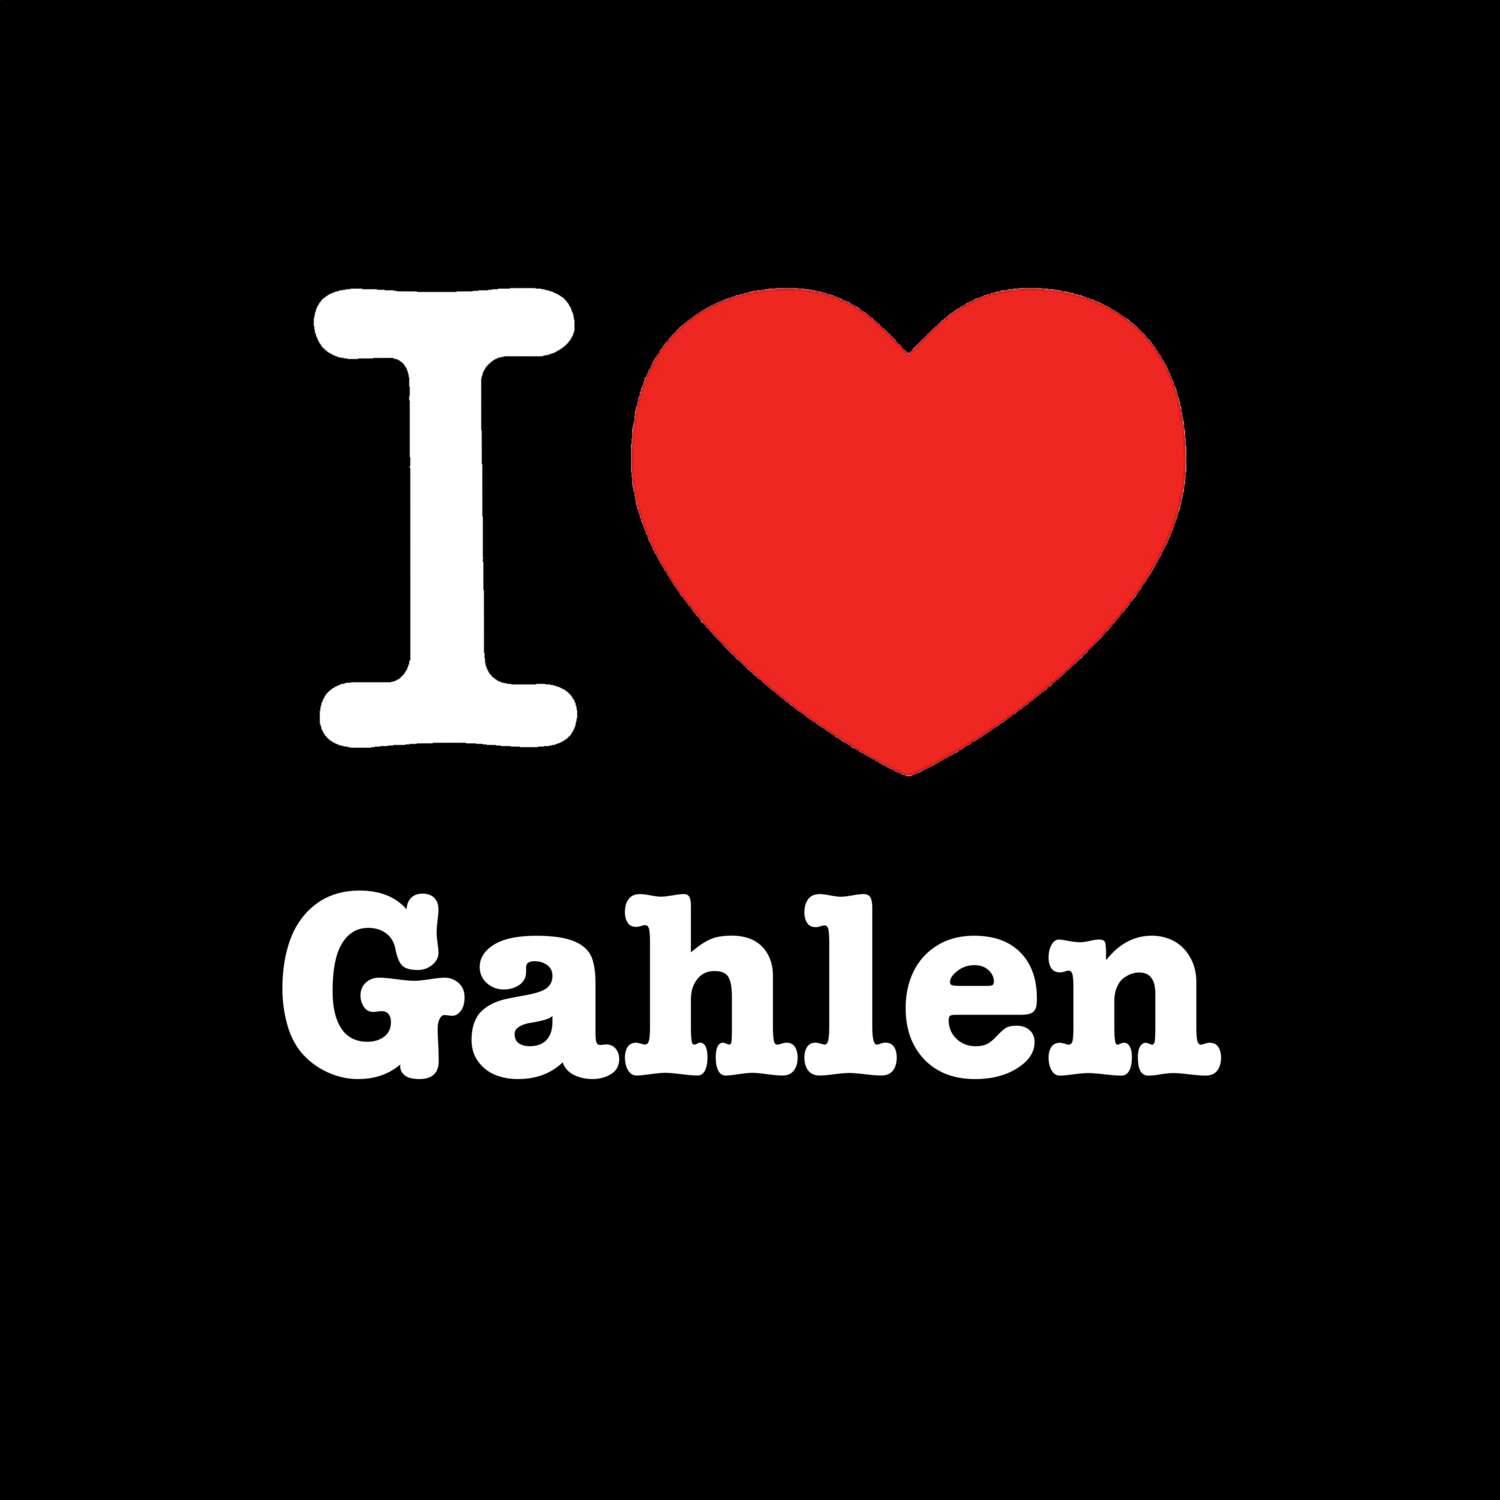 Gahlen T-Shirt »I love«